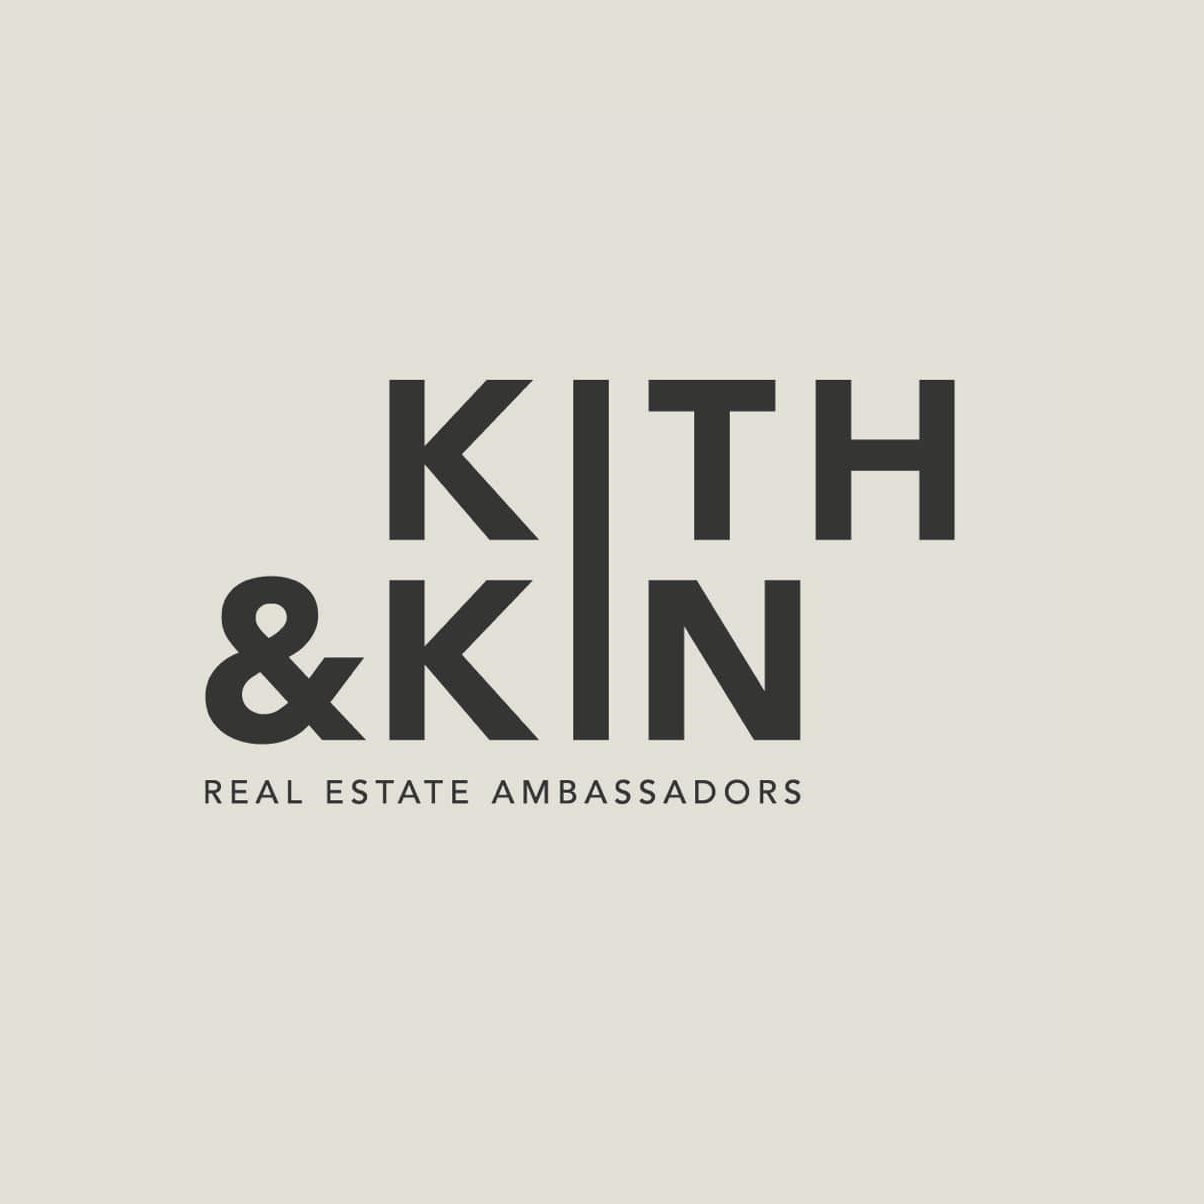 Kith & Kin Real Estate